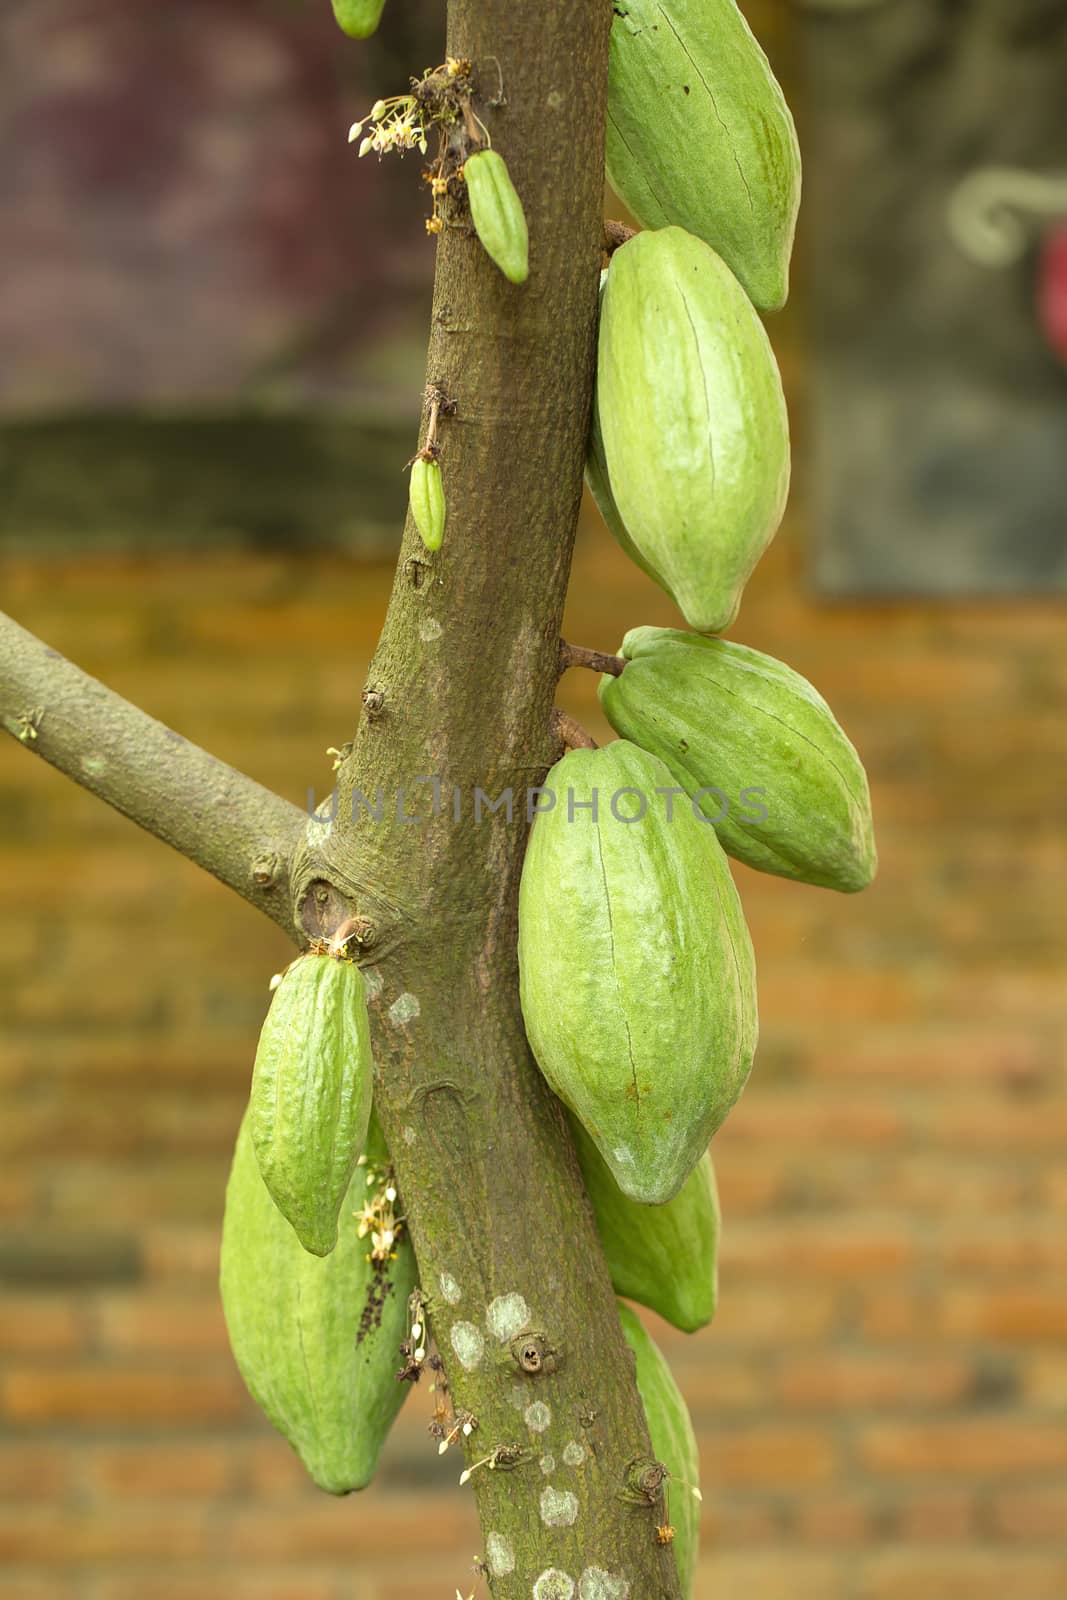 Cacao fruit, raw cacao beans, Cocoa pod on tree.